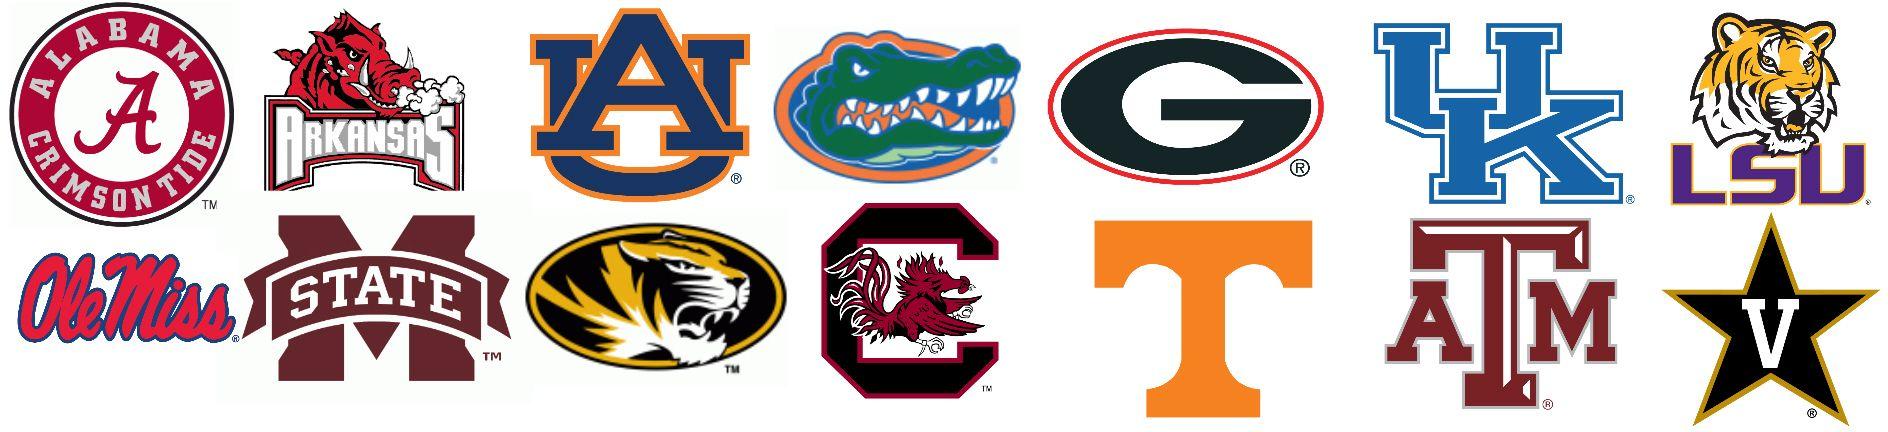 All-SEC Logo - Best Lookin' Logos of the SEC | Thinking Out Loud | gtylermills